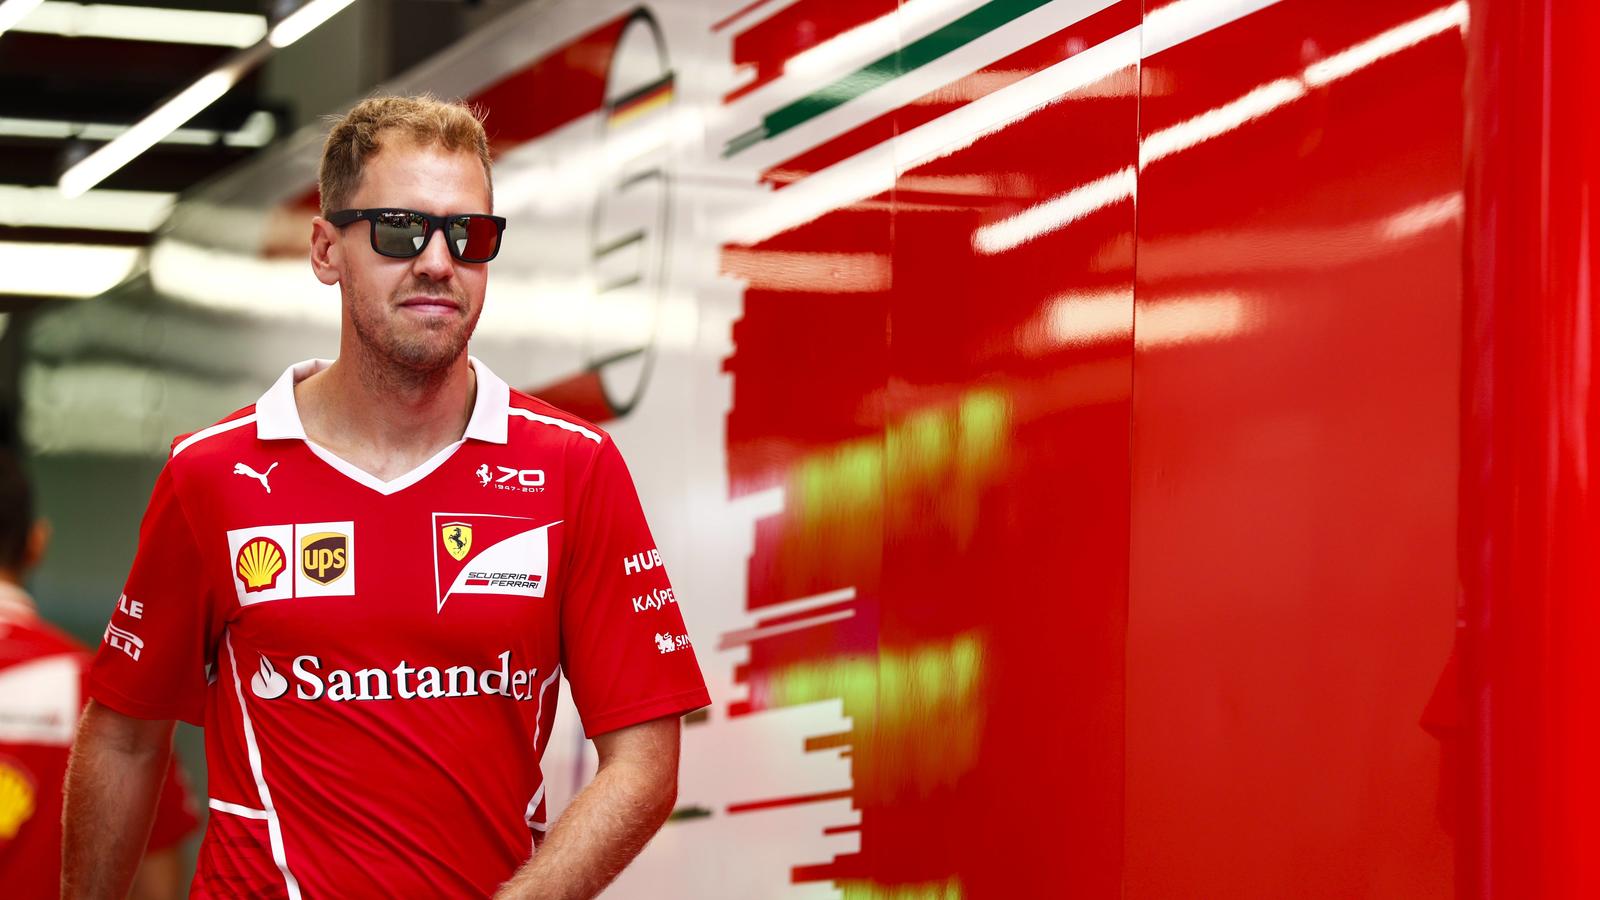 Marina Bay Circuit, Marina Bay, Singapore. Thursday 14 September 2017. Sebastian Vettel, Ferrari. World _J6I6535 PUBLICATIONxINxGERxSUIxAUTxHUNxONLY  